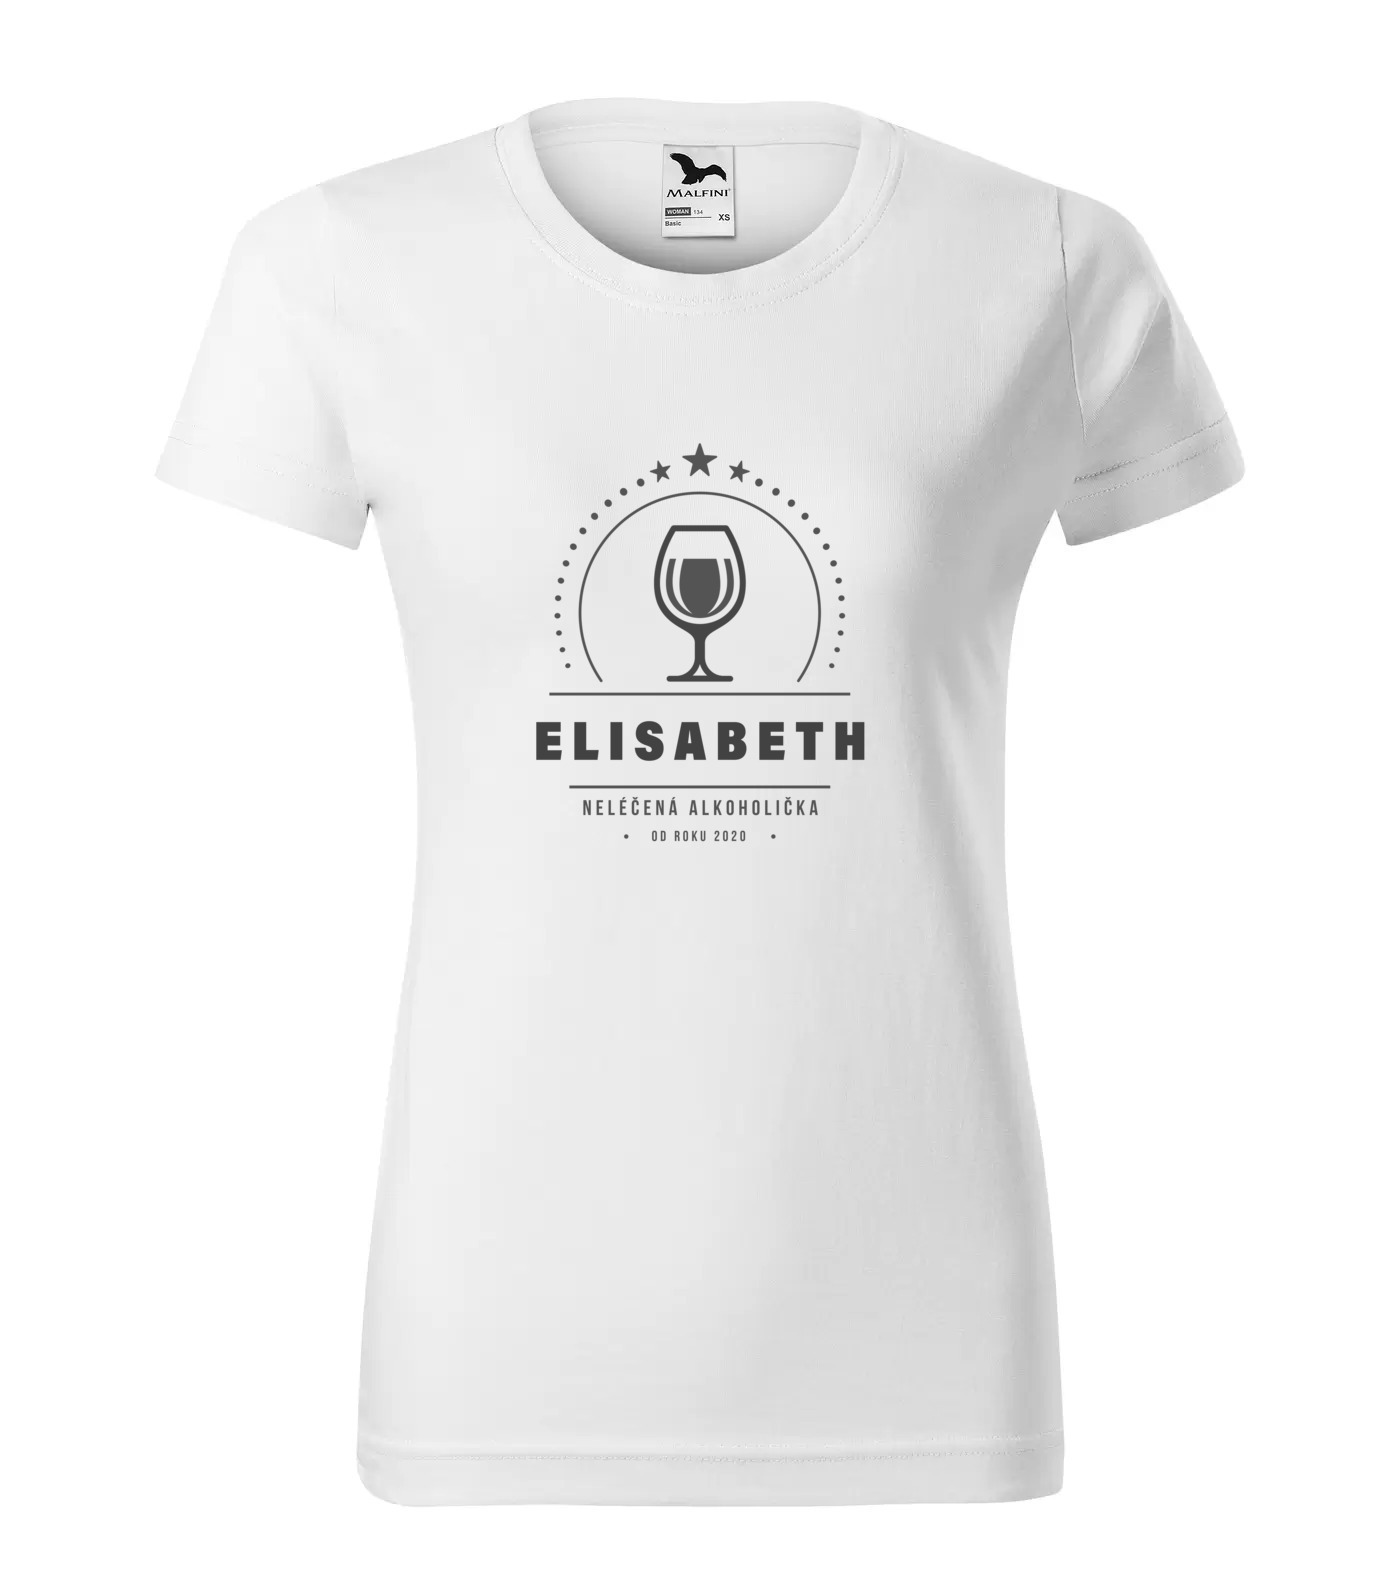 Tričko Alkoholička Elisabeth